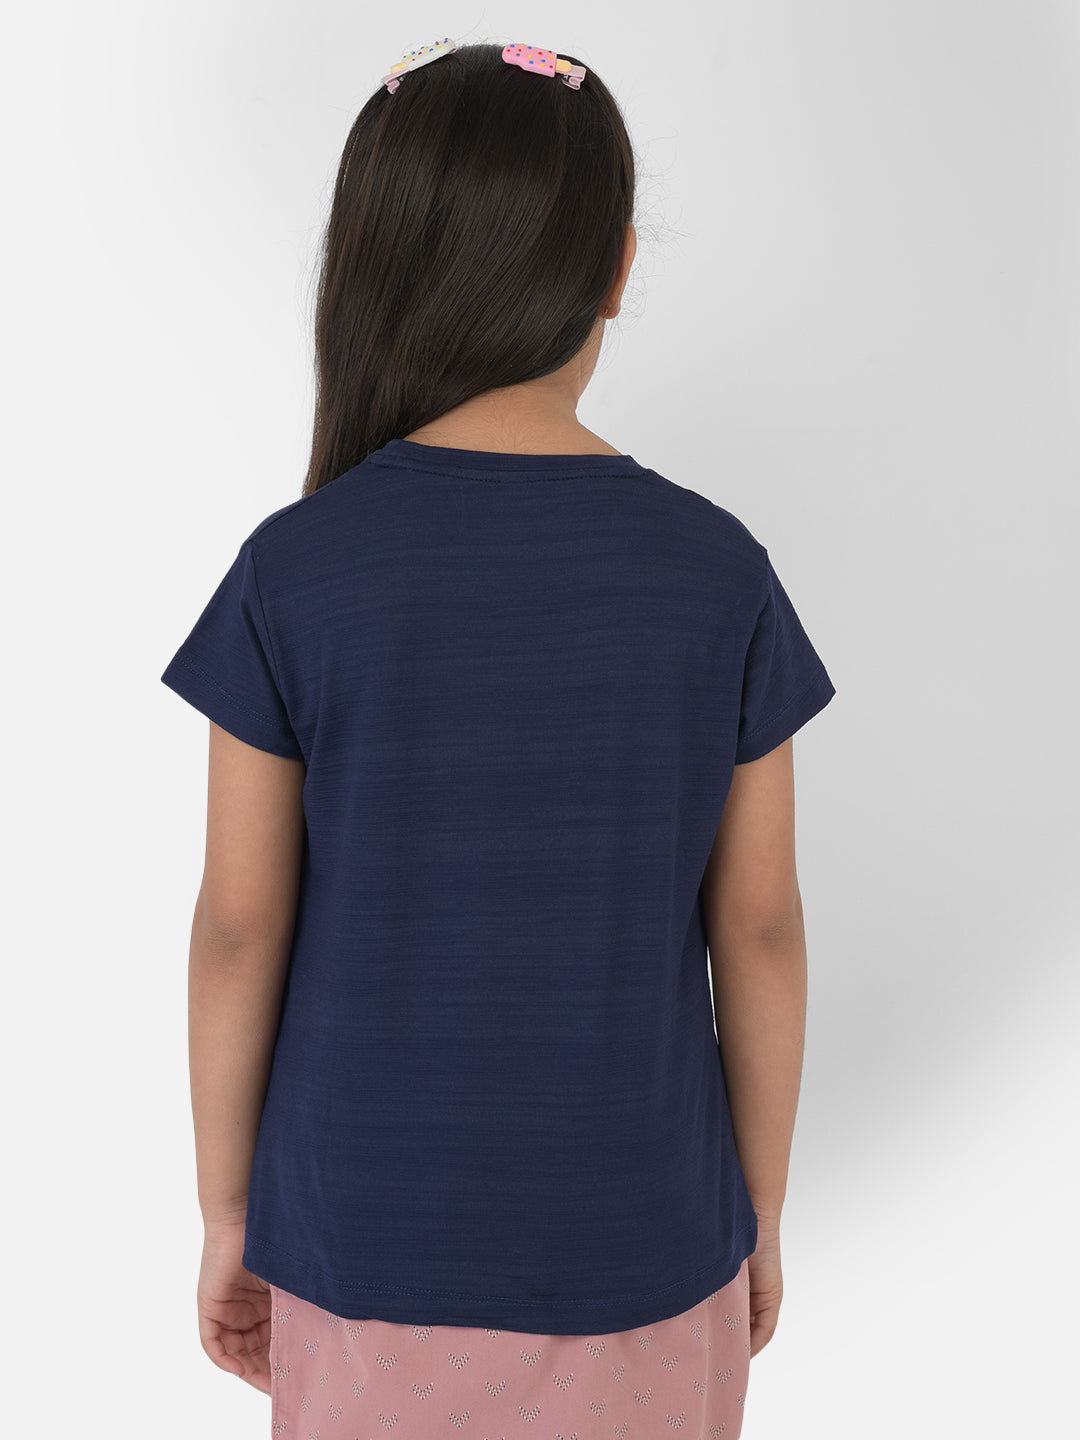 Navy Blue Printed Round Neck T-Shirt - Girls T-Shirts